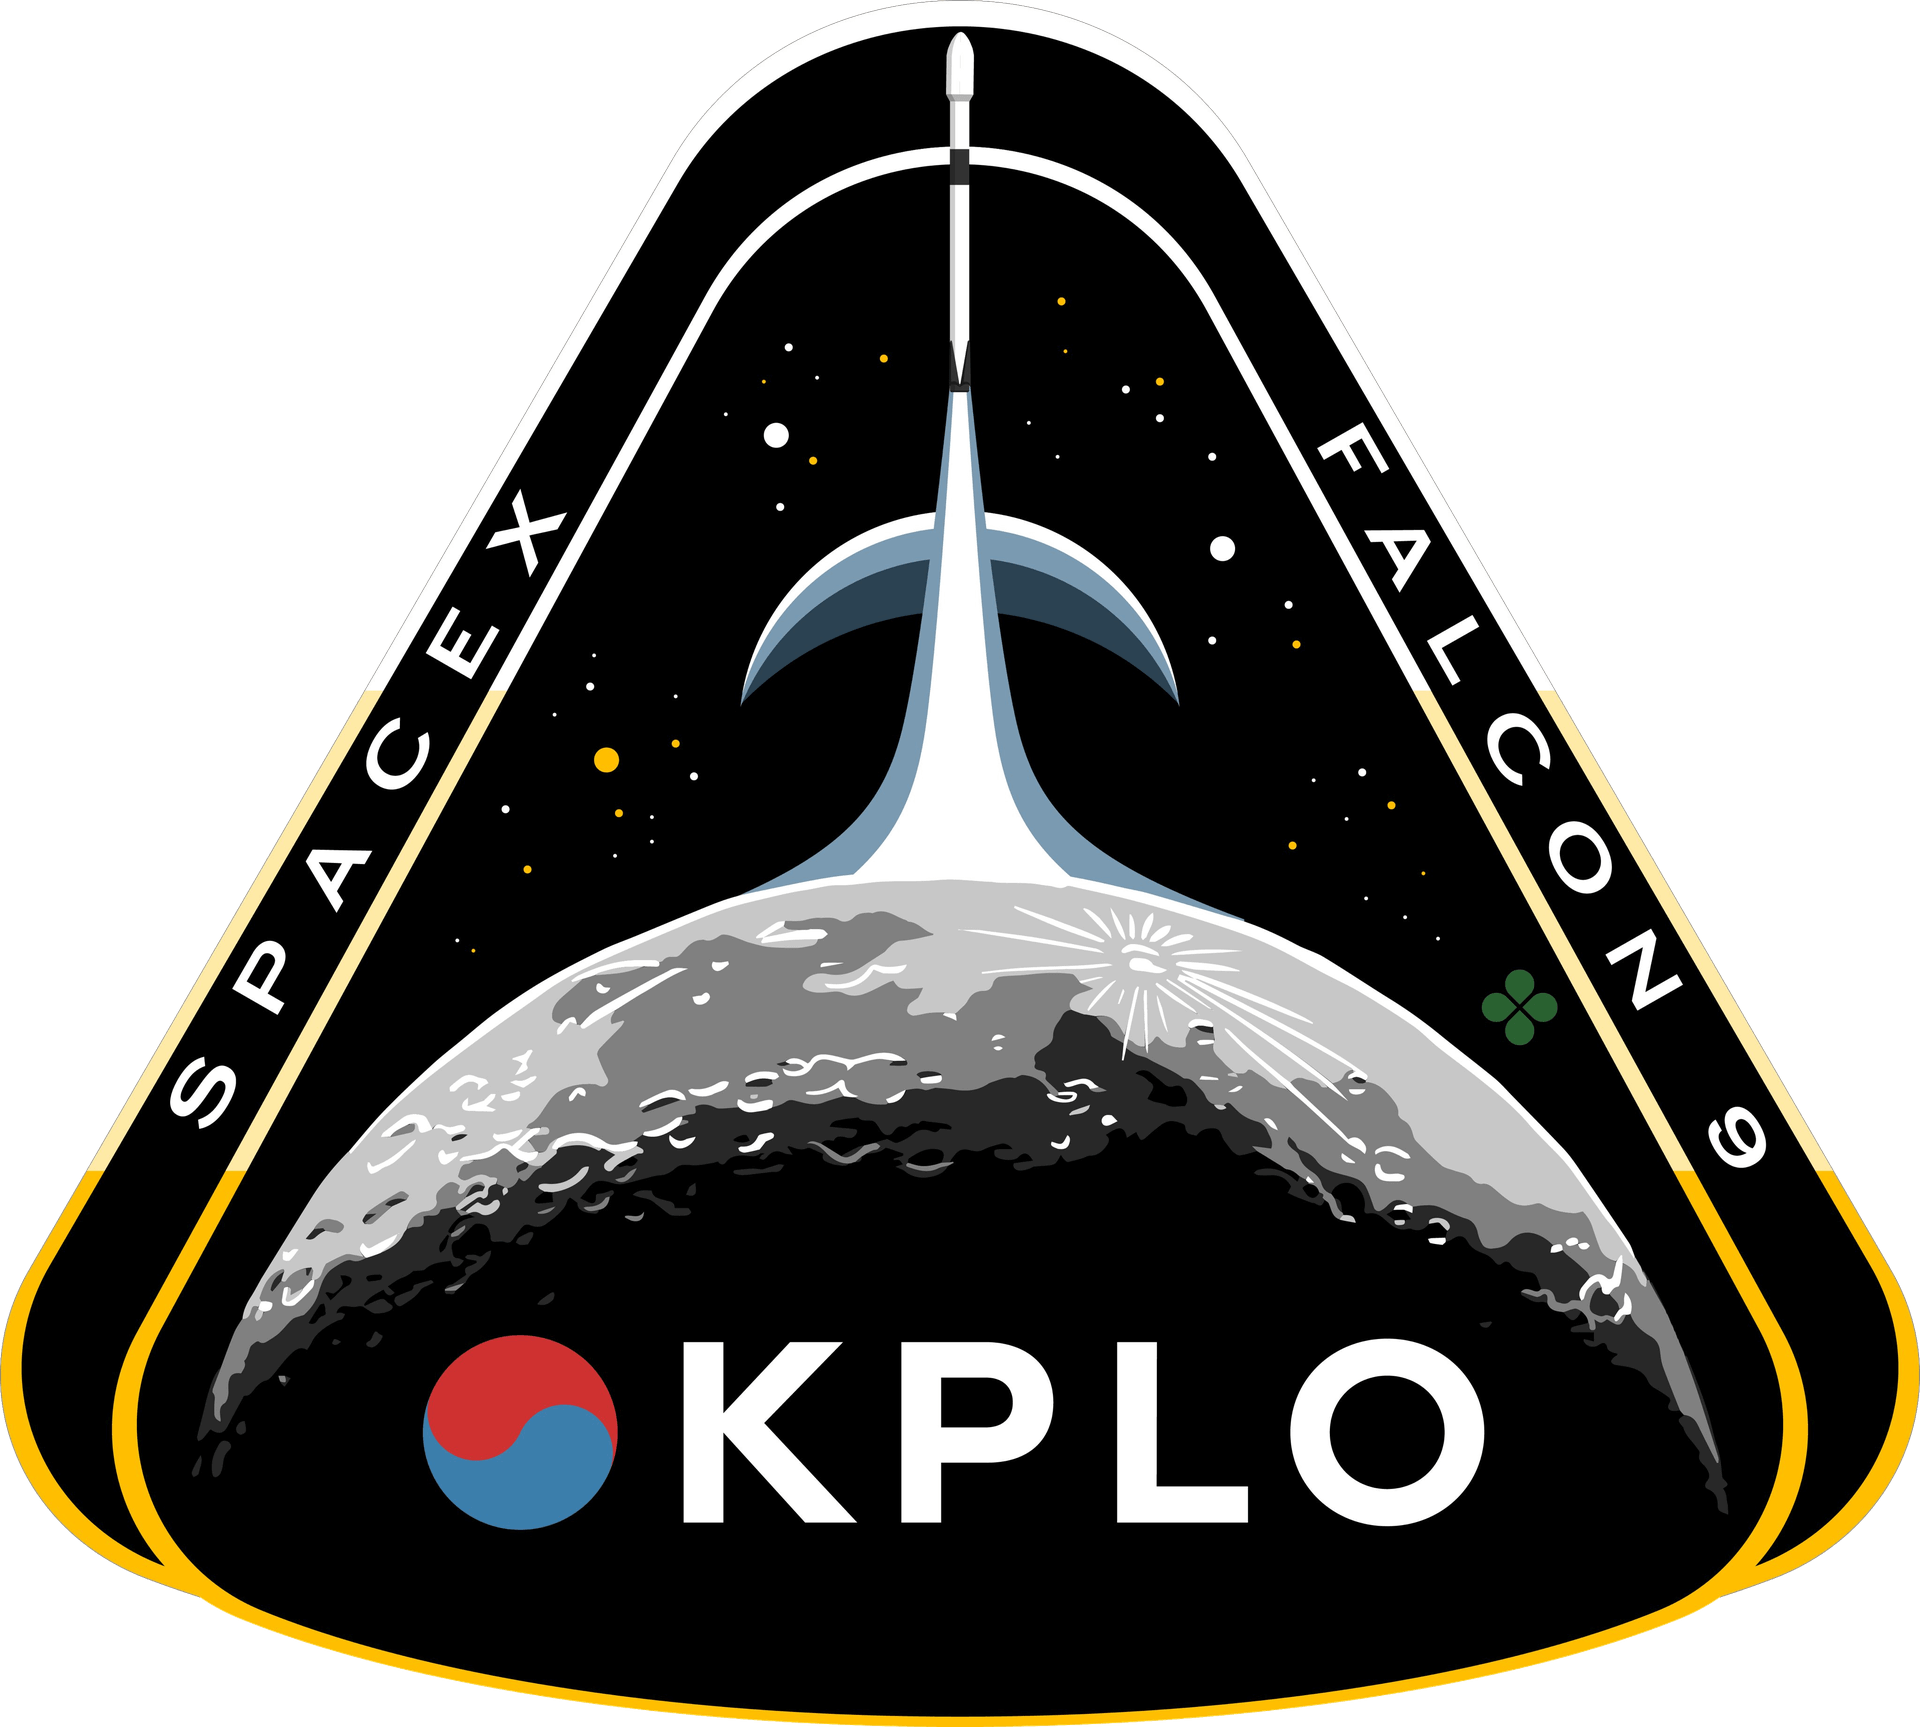 Mission patch for Danuri (KPLO - Korean Pathfinder Lunar Orbiter)